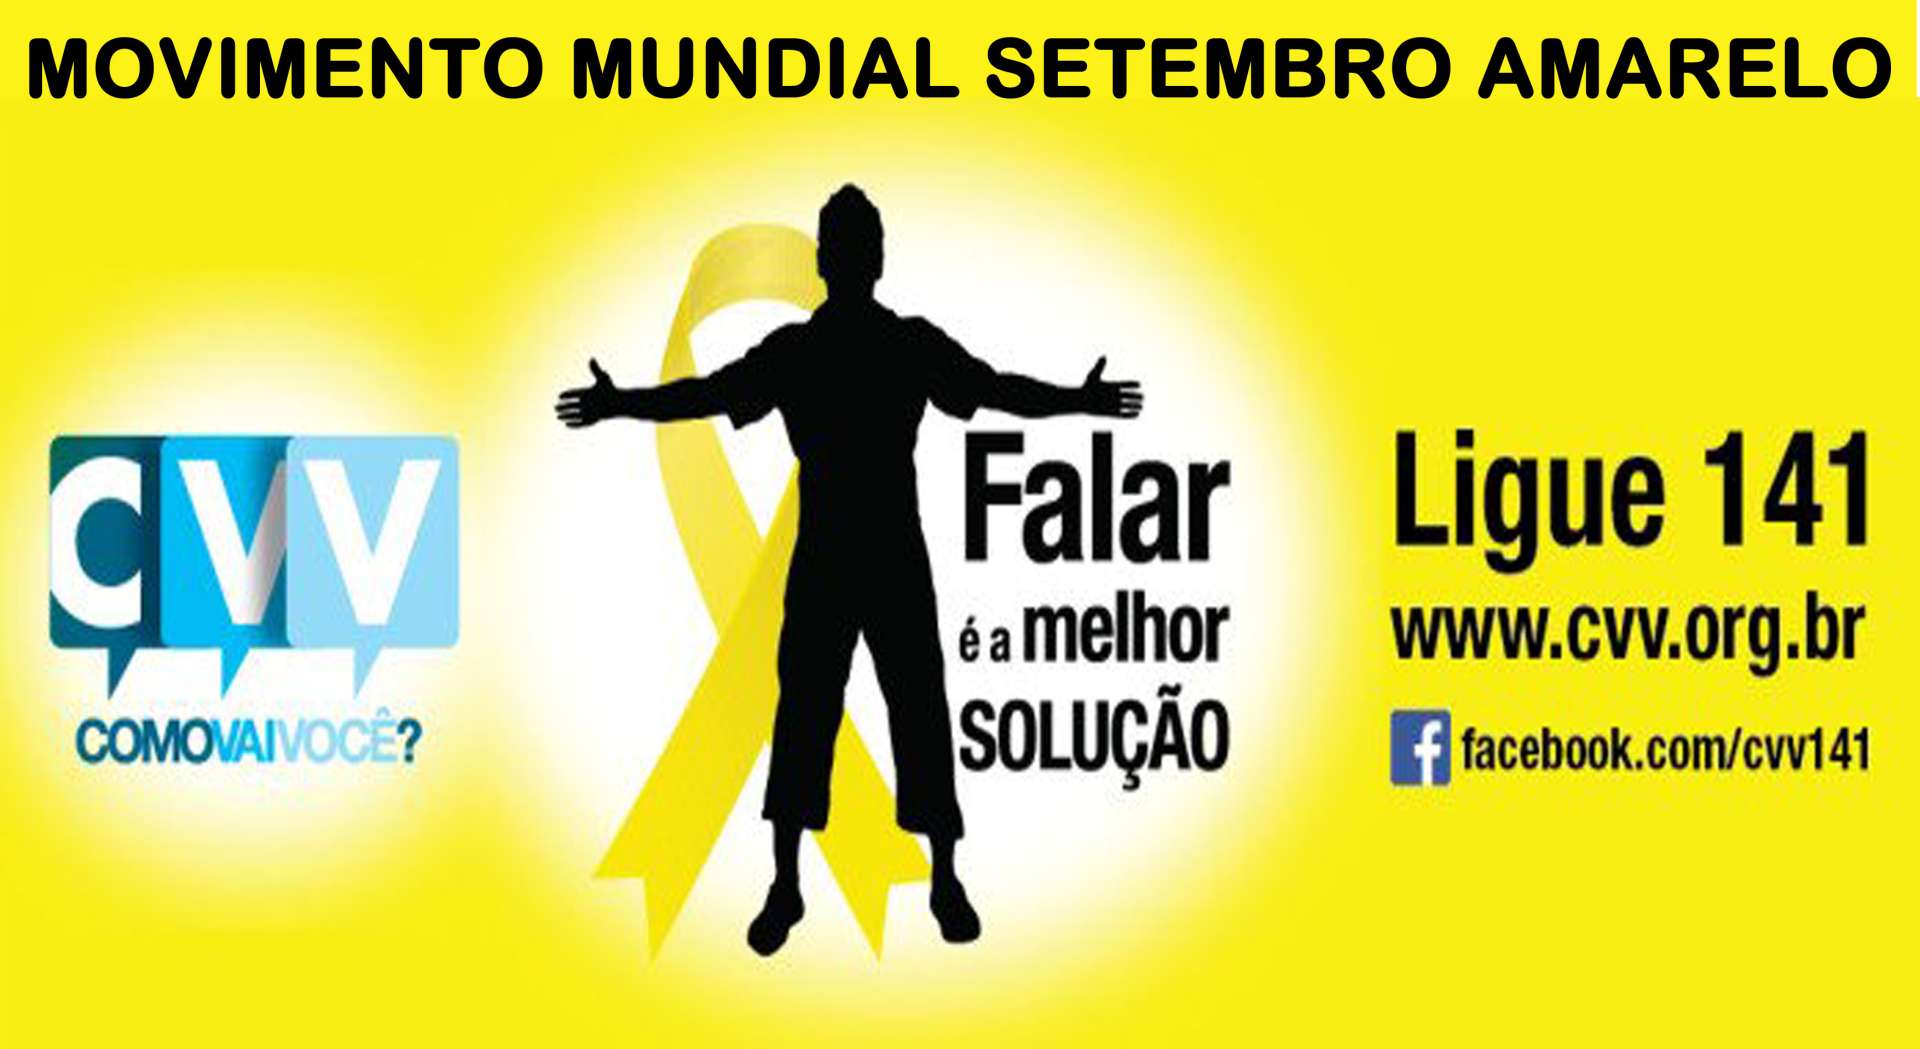 Coritiba Retribui apoia campanha Setembro Amarelo